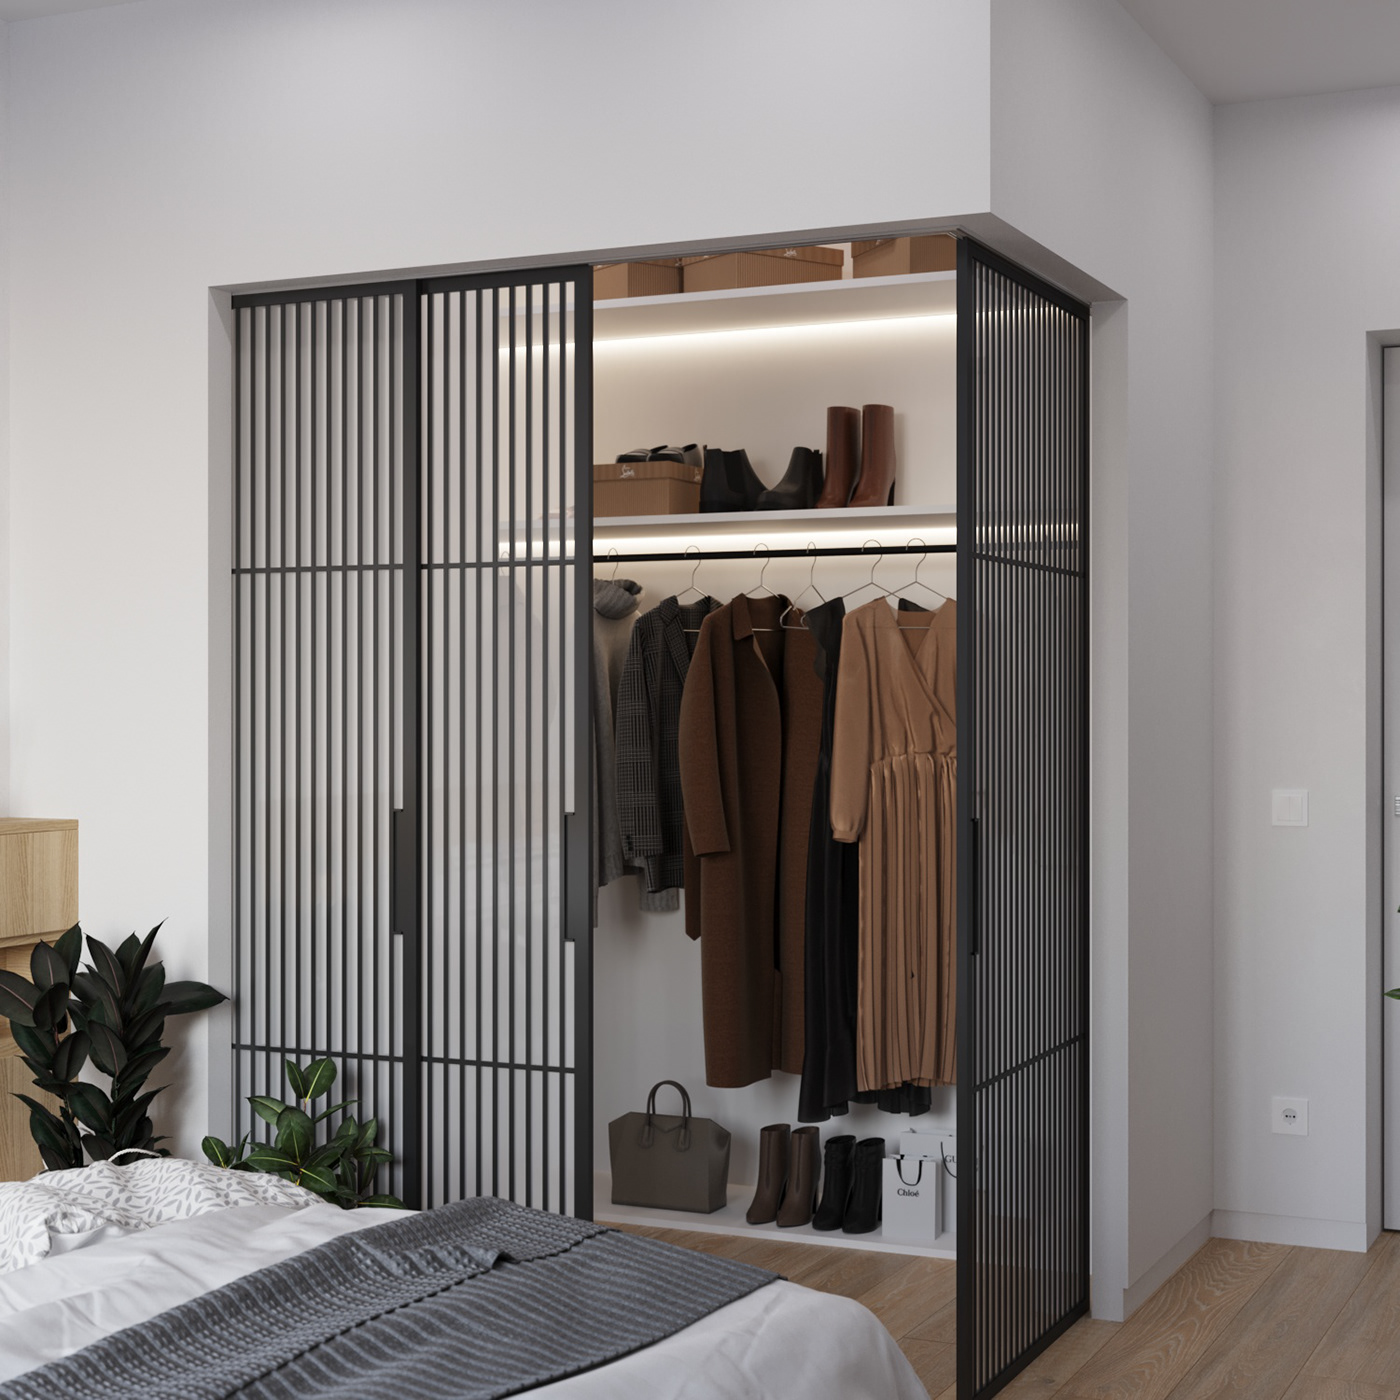 3ds max bedroom corona corona render  Interior interior design  Render visualization